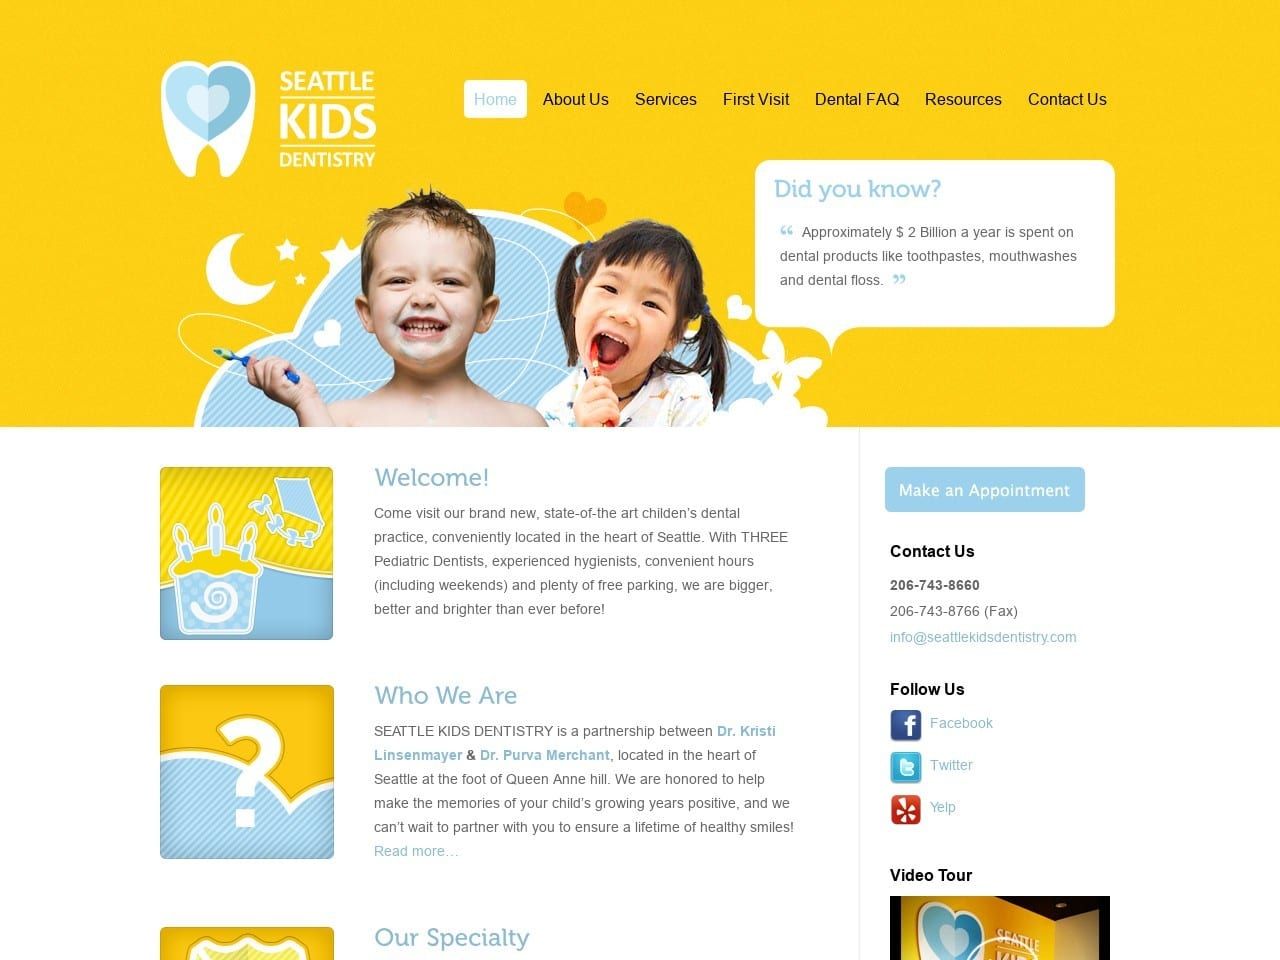 Seattle Kids Dentistry Website Screenshot from seattlekidsdentistry.com